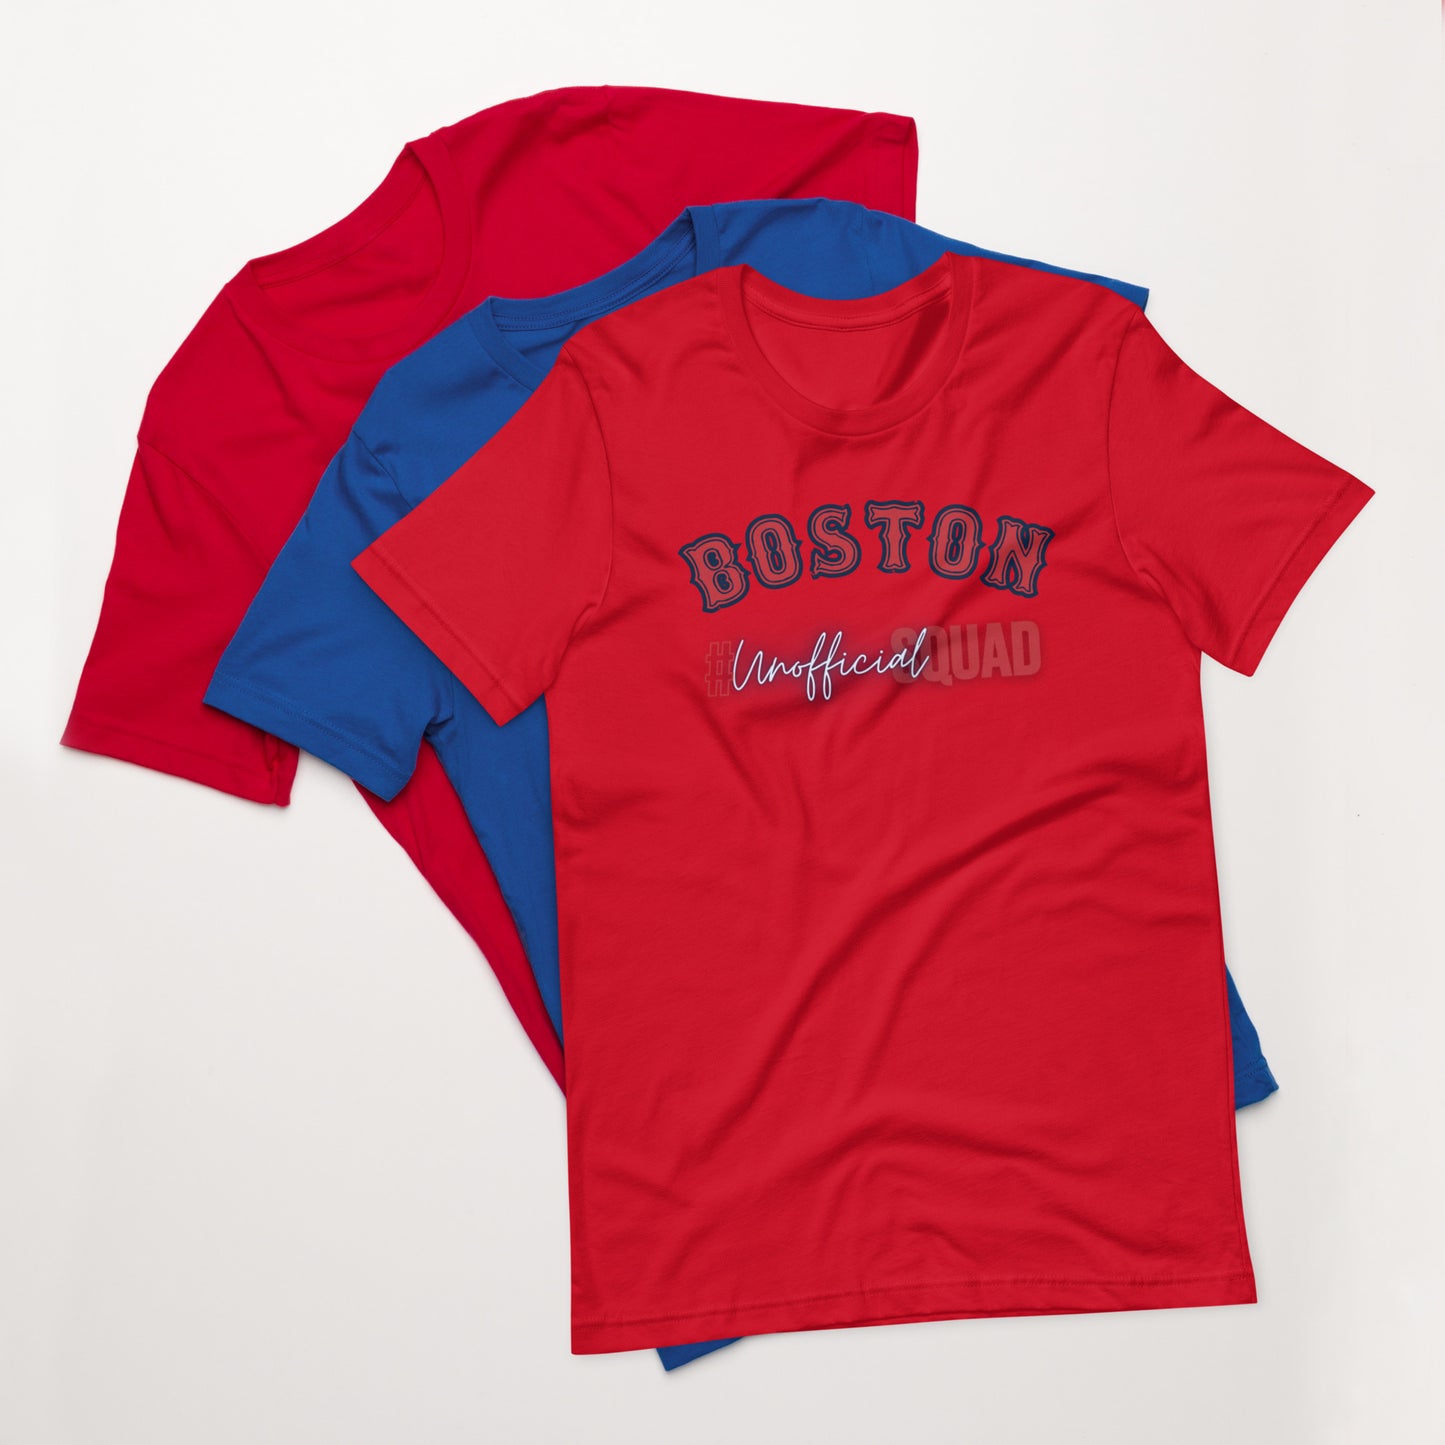 Unofficial Squad Boston - Unisex t-shirt